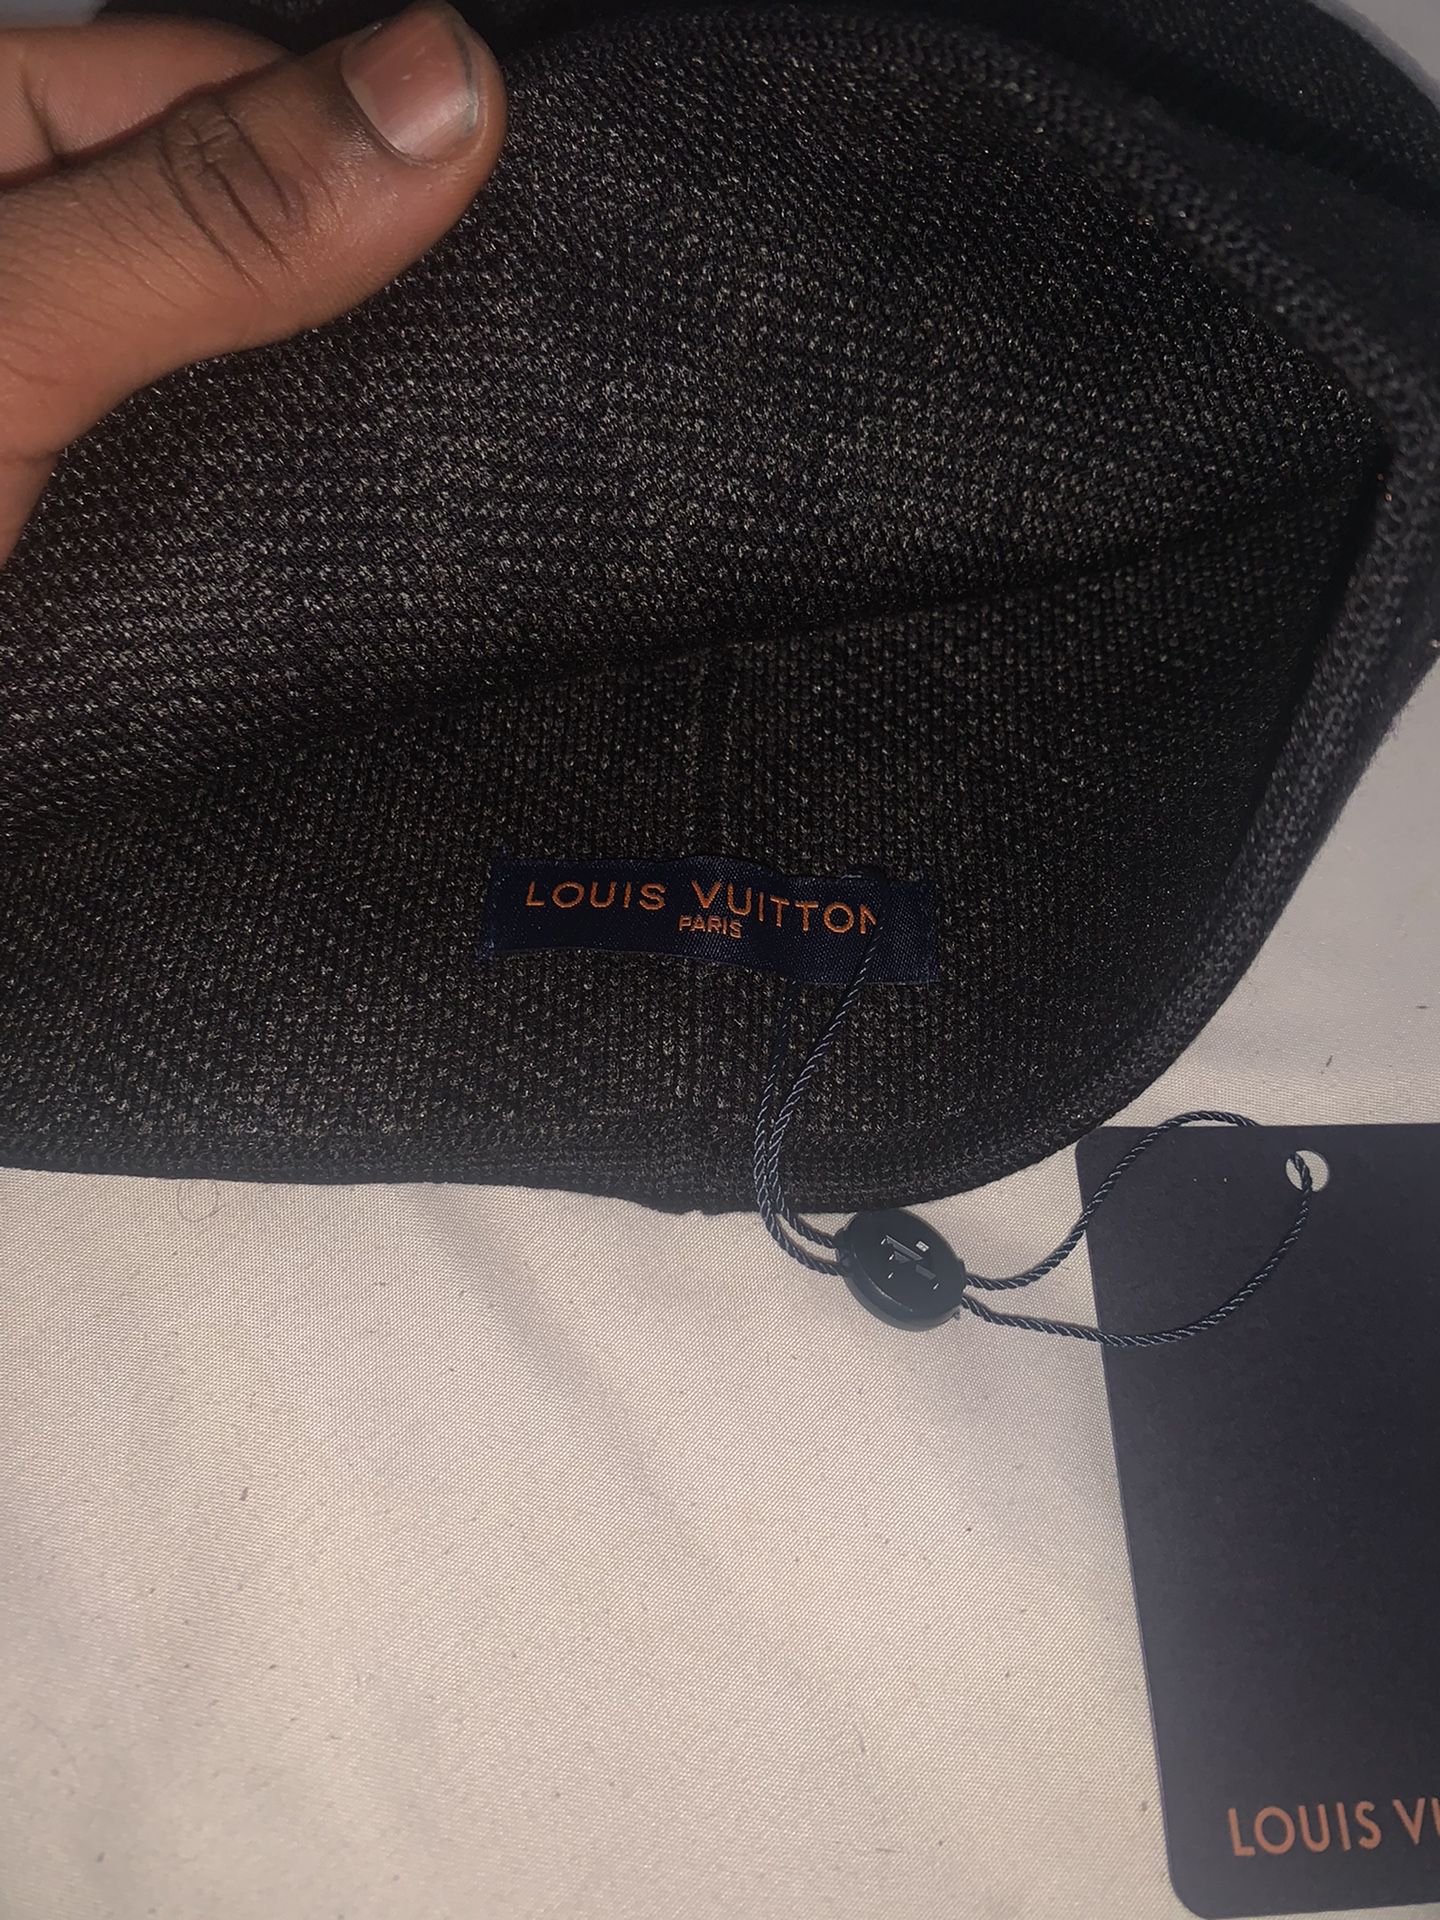 Louis Vuitton Black Neo Petit Damier Beanie for Sale in Dallas, TX - OfferUp